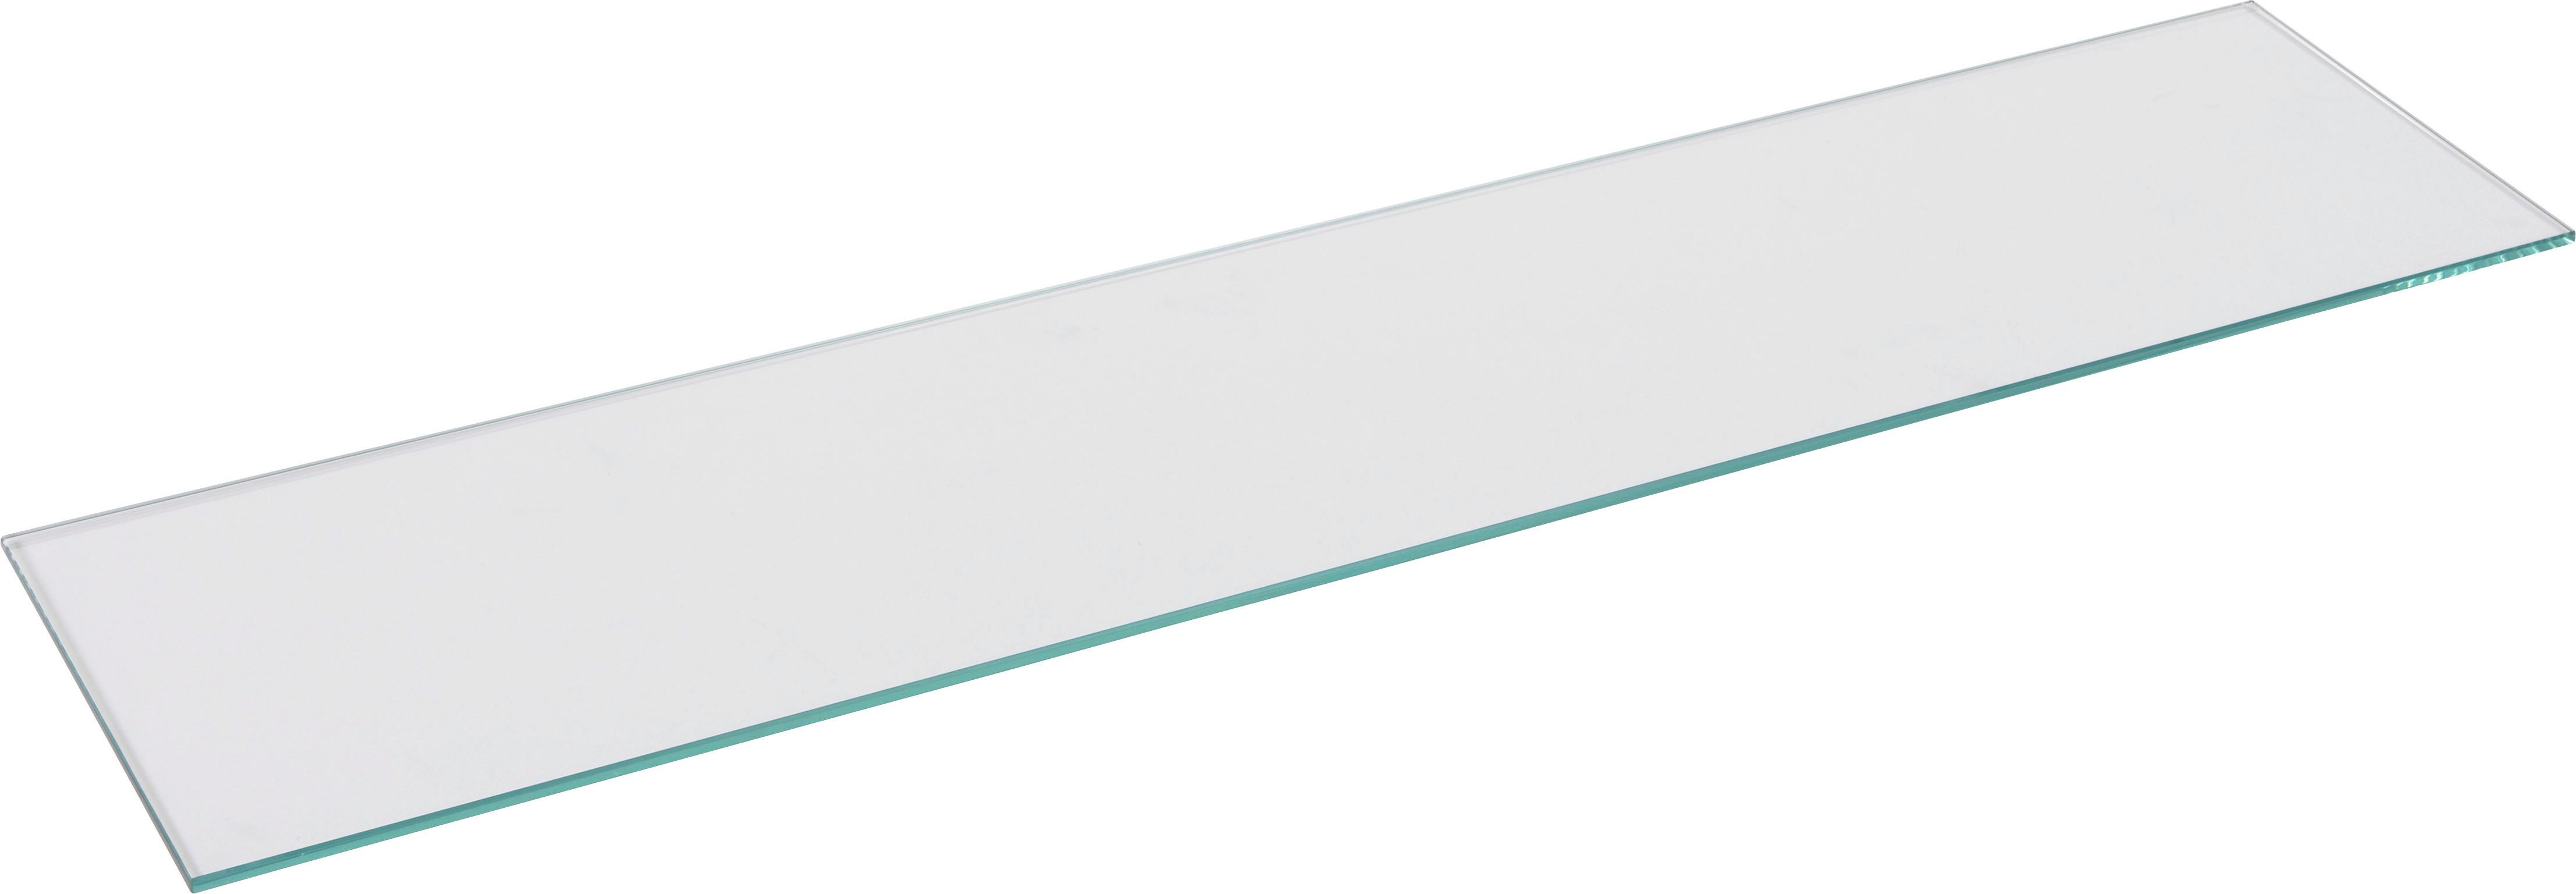 Wandboard Galileo B:120cm Glas, Transparent - Glas (120/0,8/26cm) - Homezone